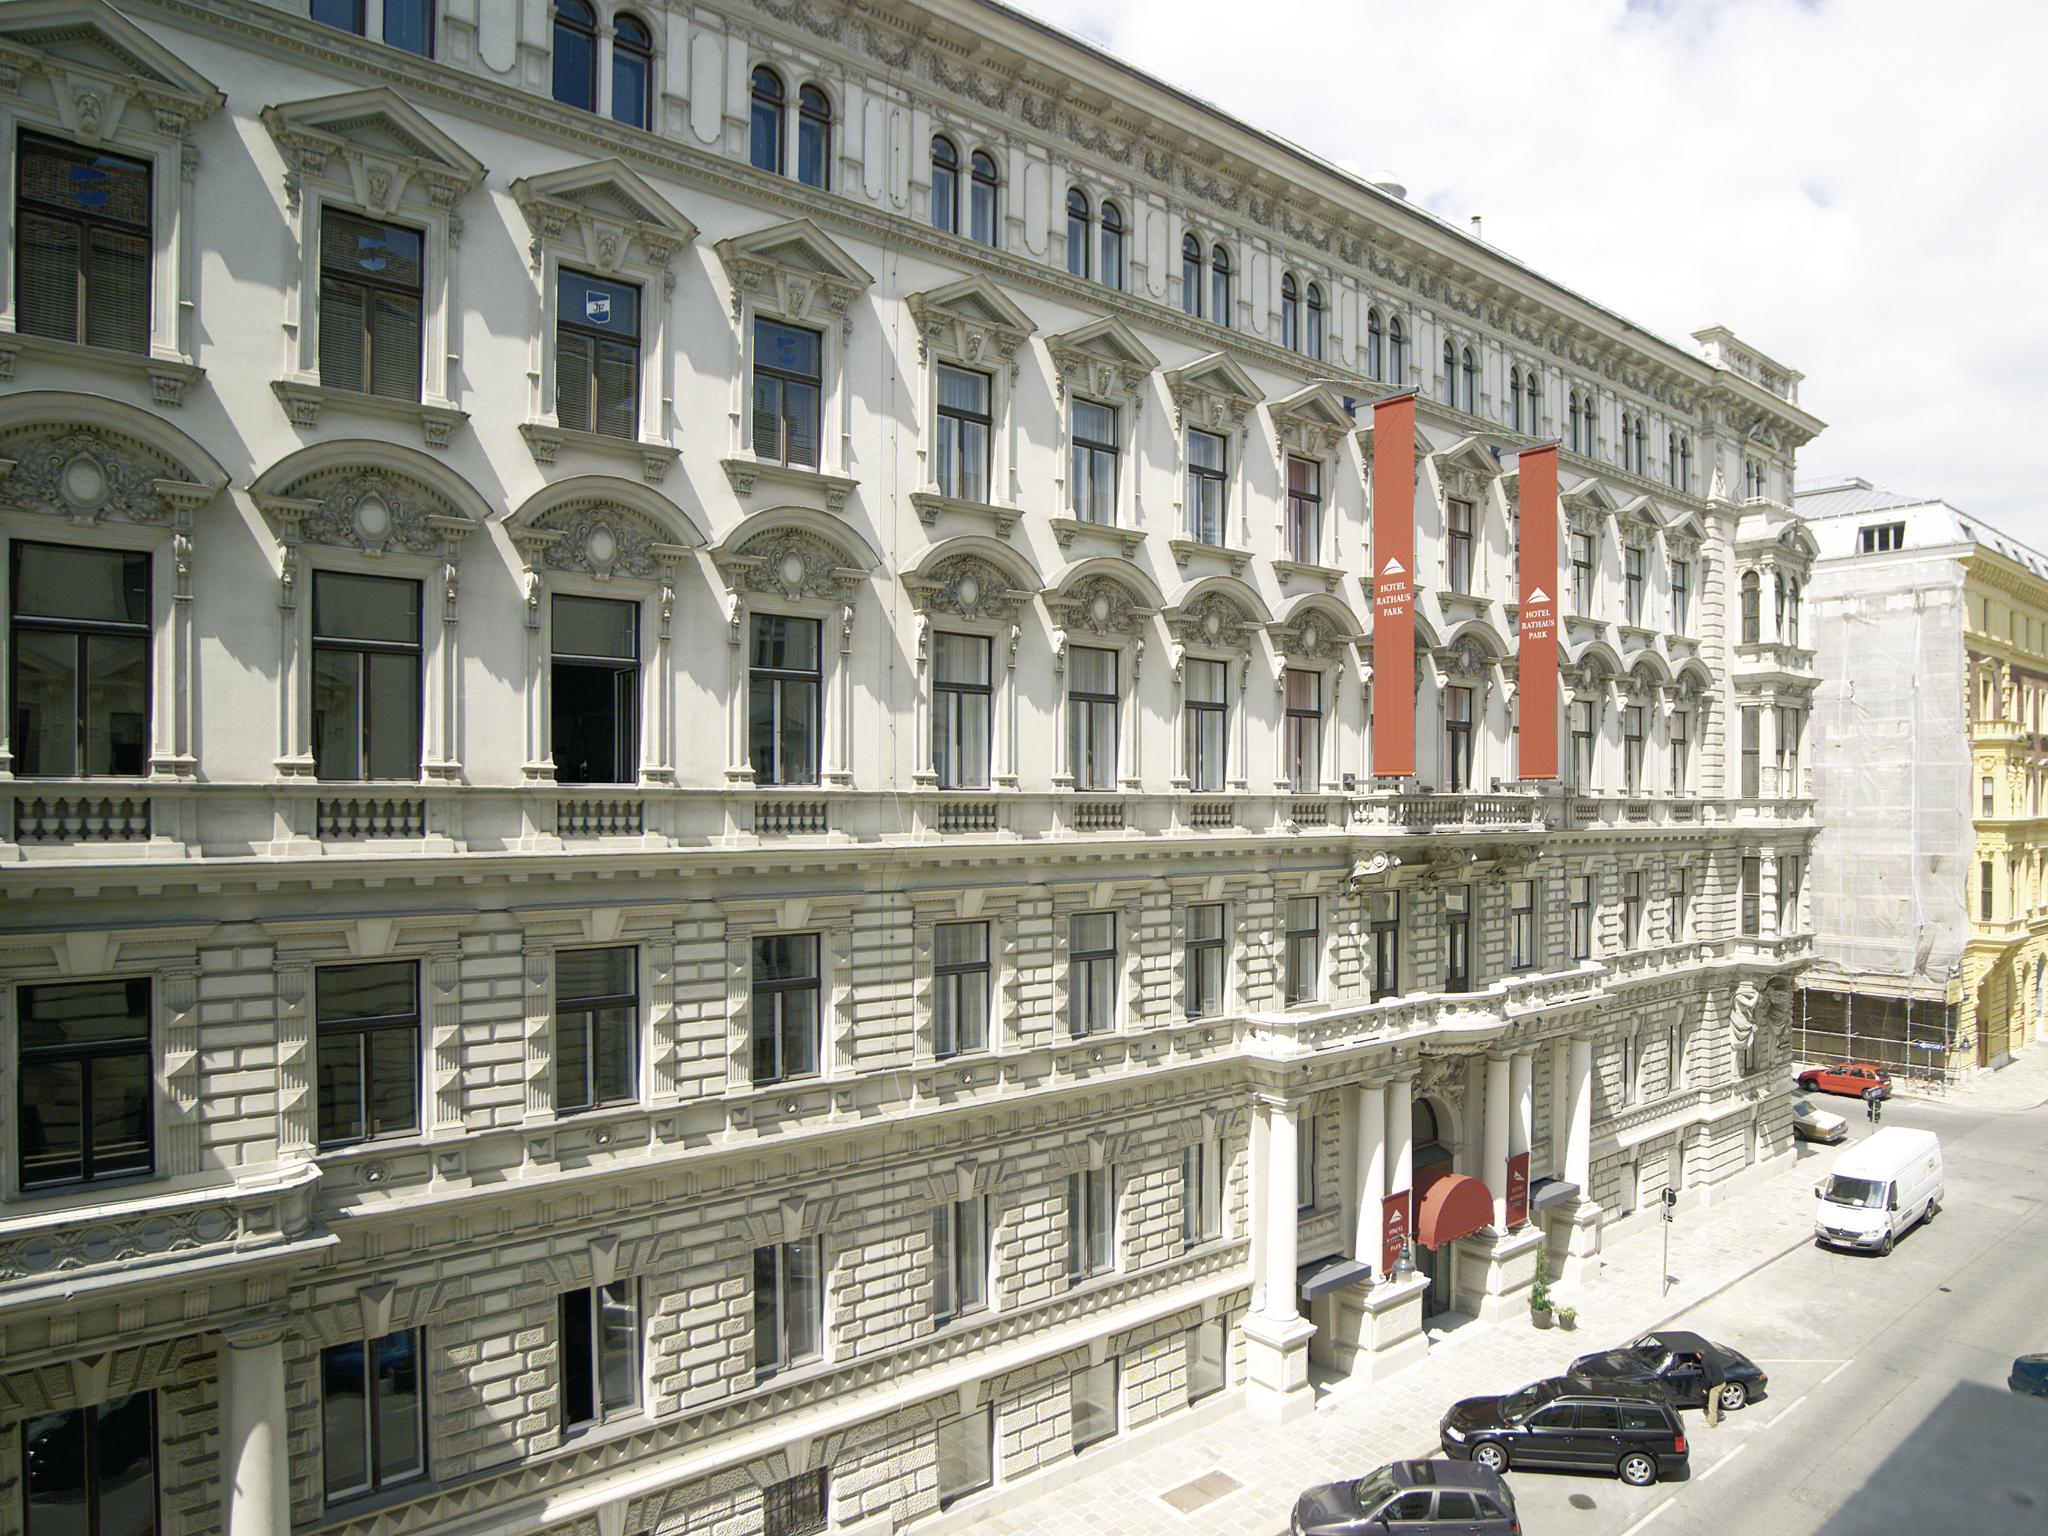 Austria Trend Hotel Anatol Wien Экстерьер фото